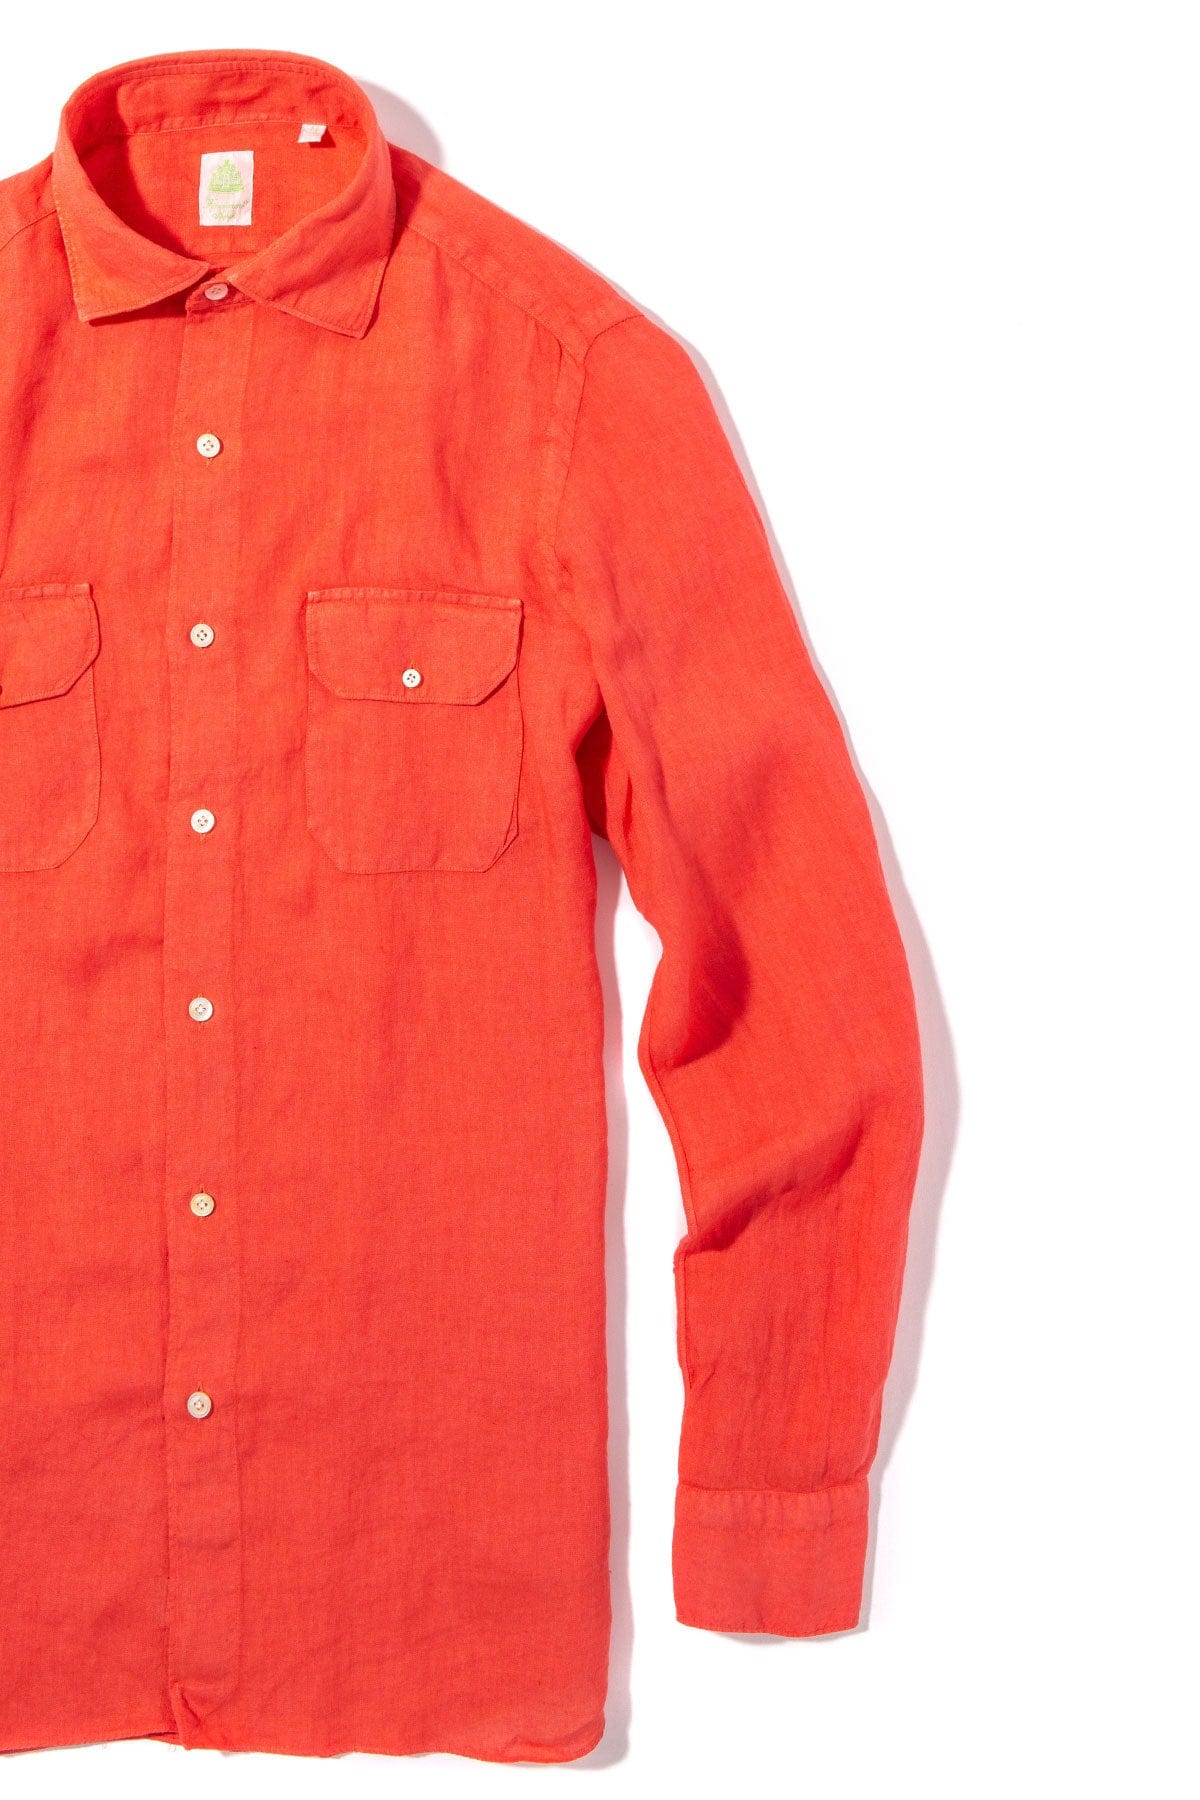 Otztal 2 Pocket Shirt In Red - AXEL'S